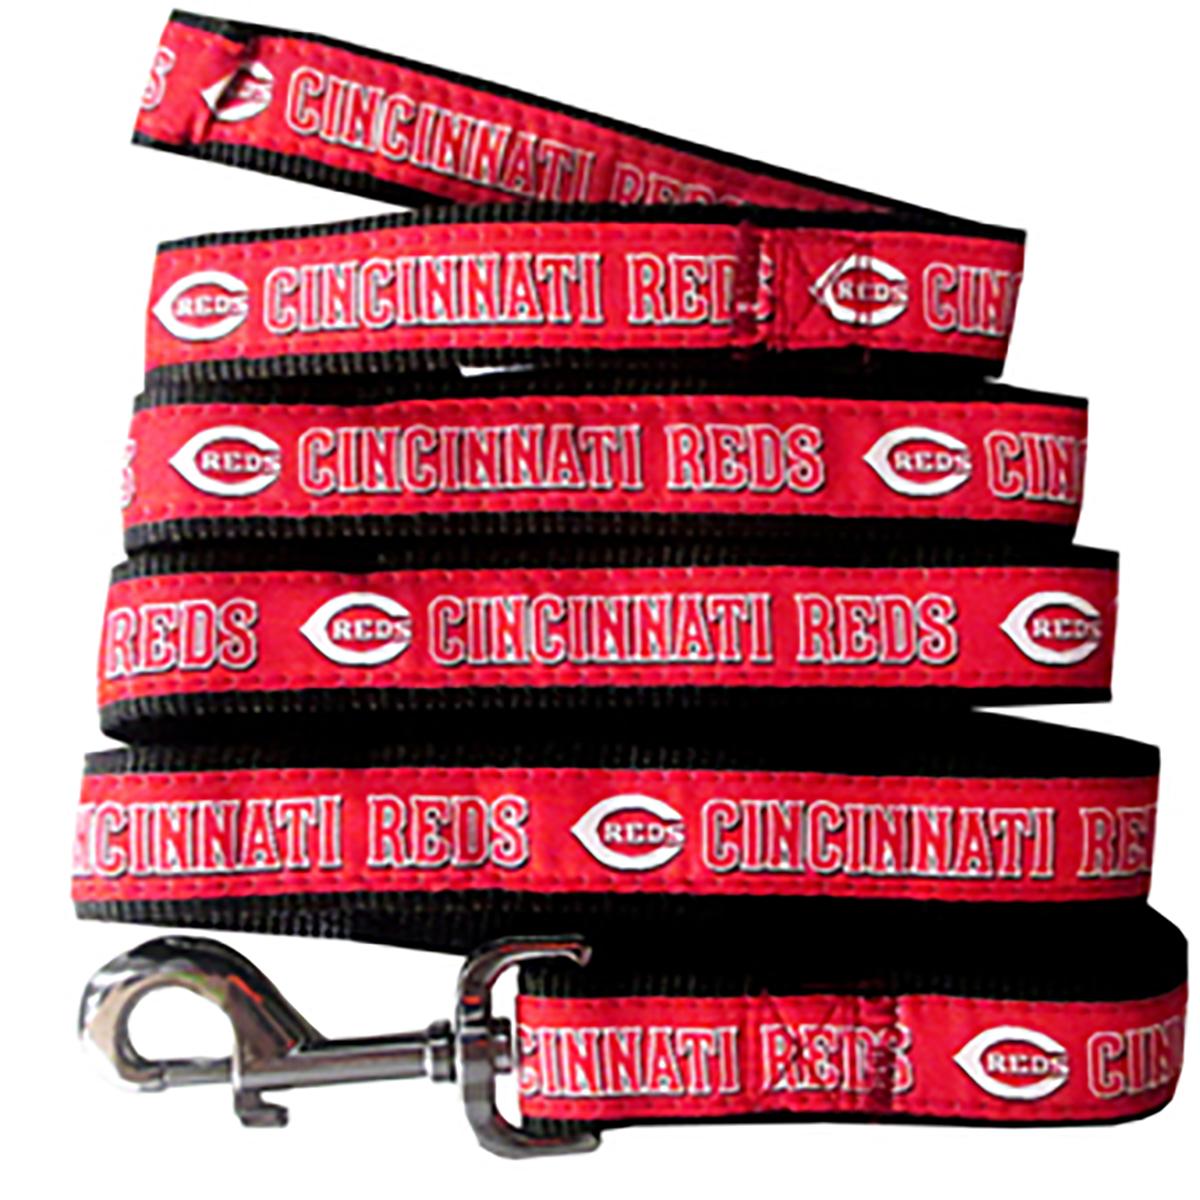 Cincinnati Reds Officially Licensed Dog Leash